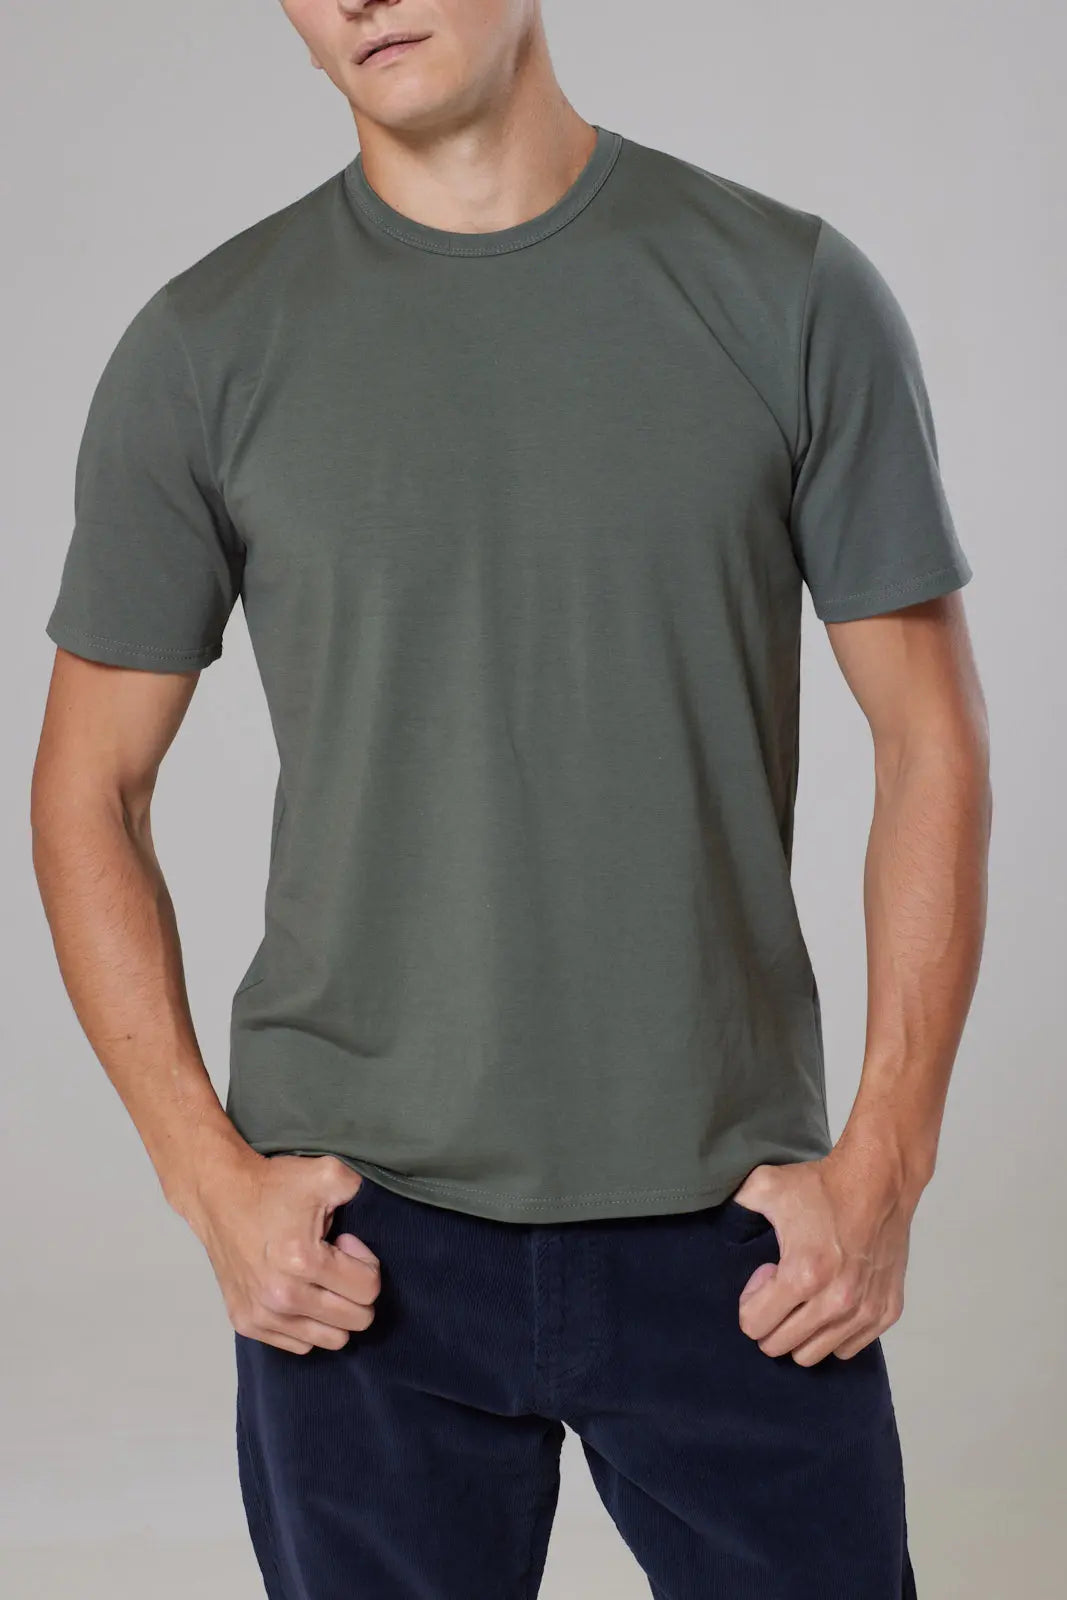 Trueman Short Sleeve Tee Shirt - Olive